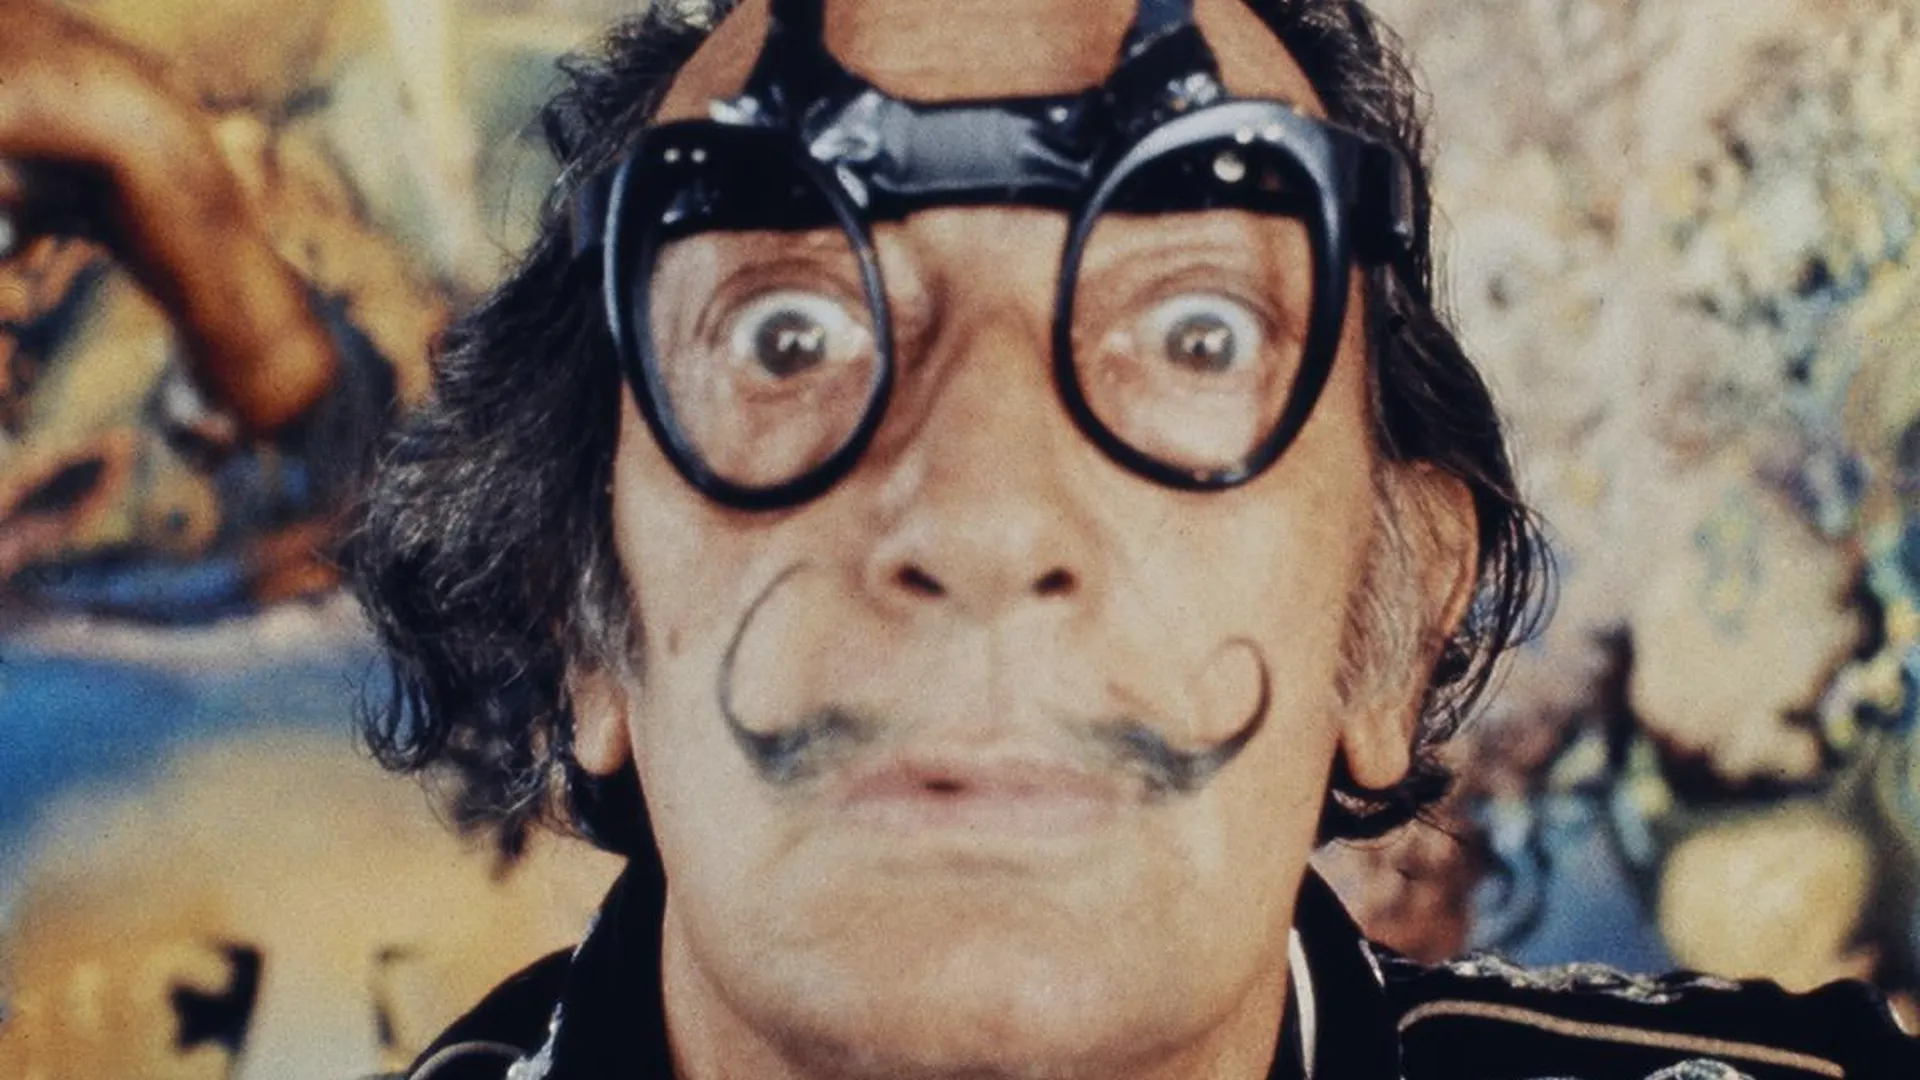 Salvador Dalí, Fundació Gala-Salvador Dalí, UPRAVIS, Moscow, 2019